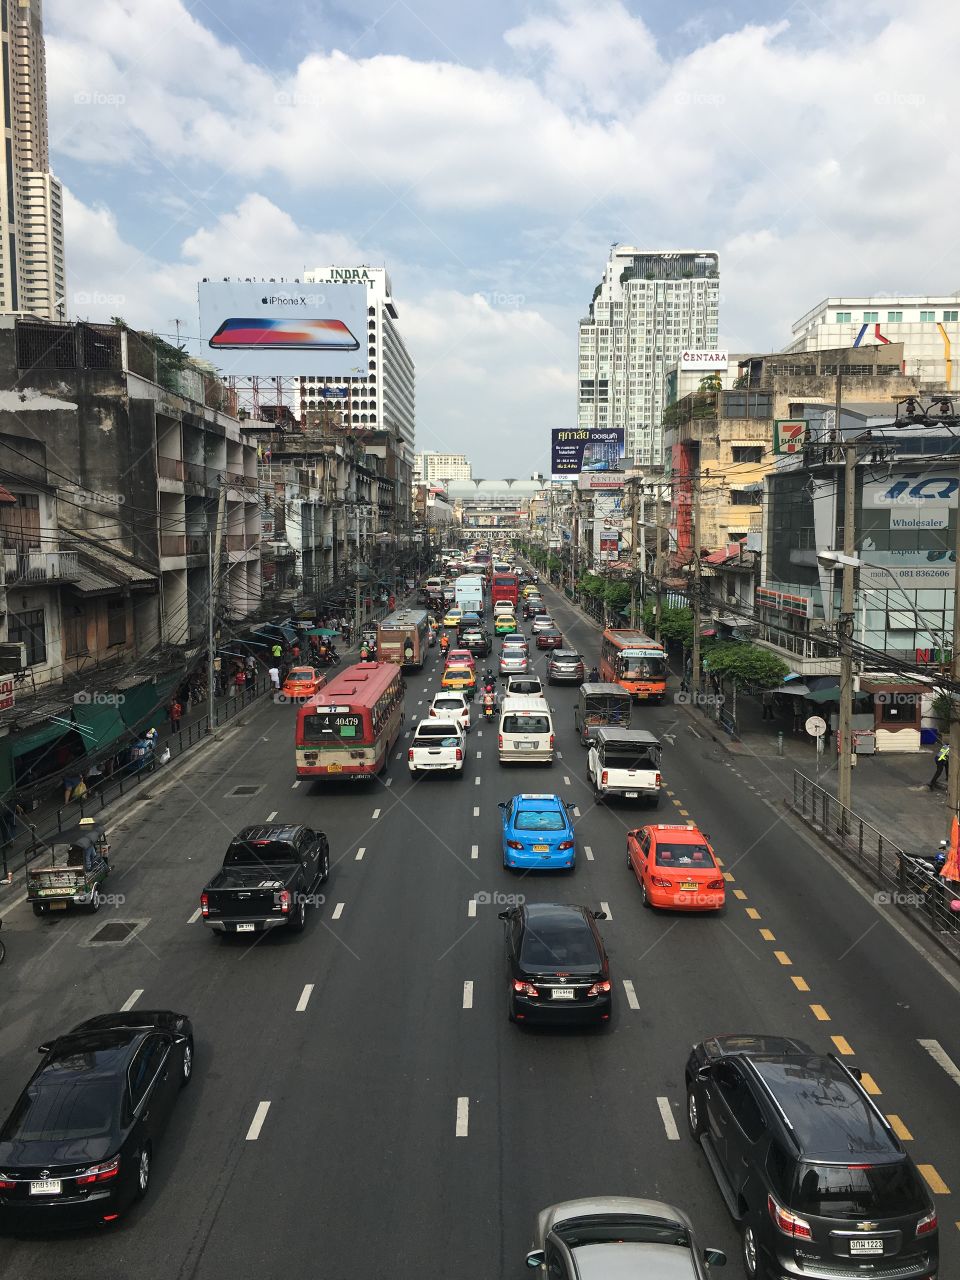 Bankok traffic